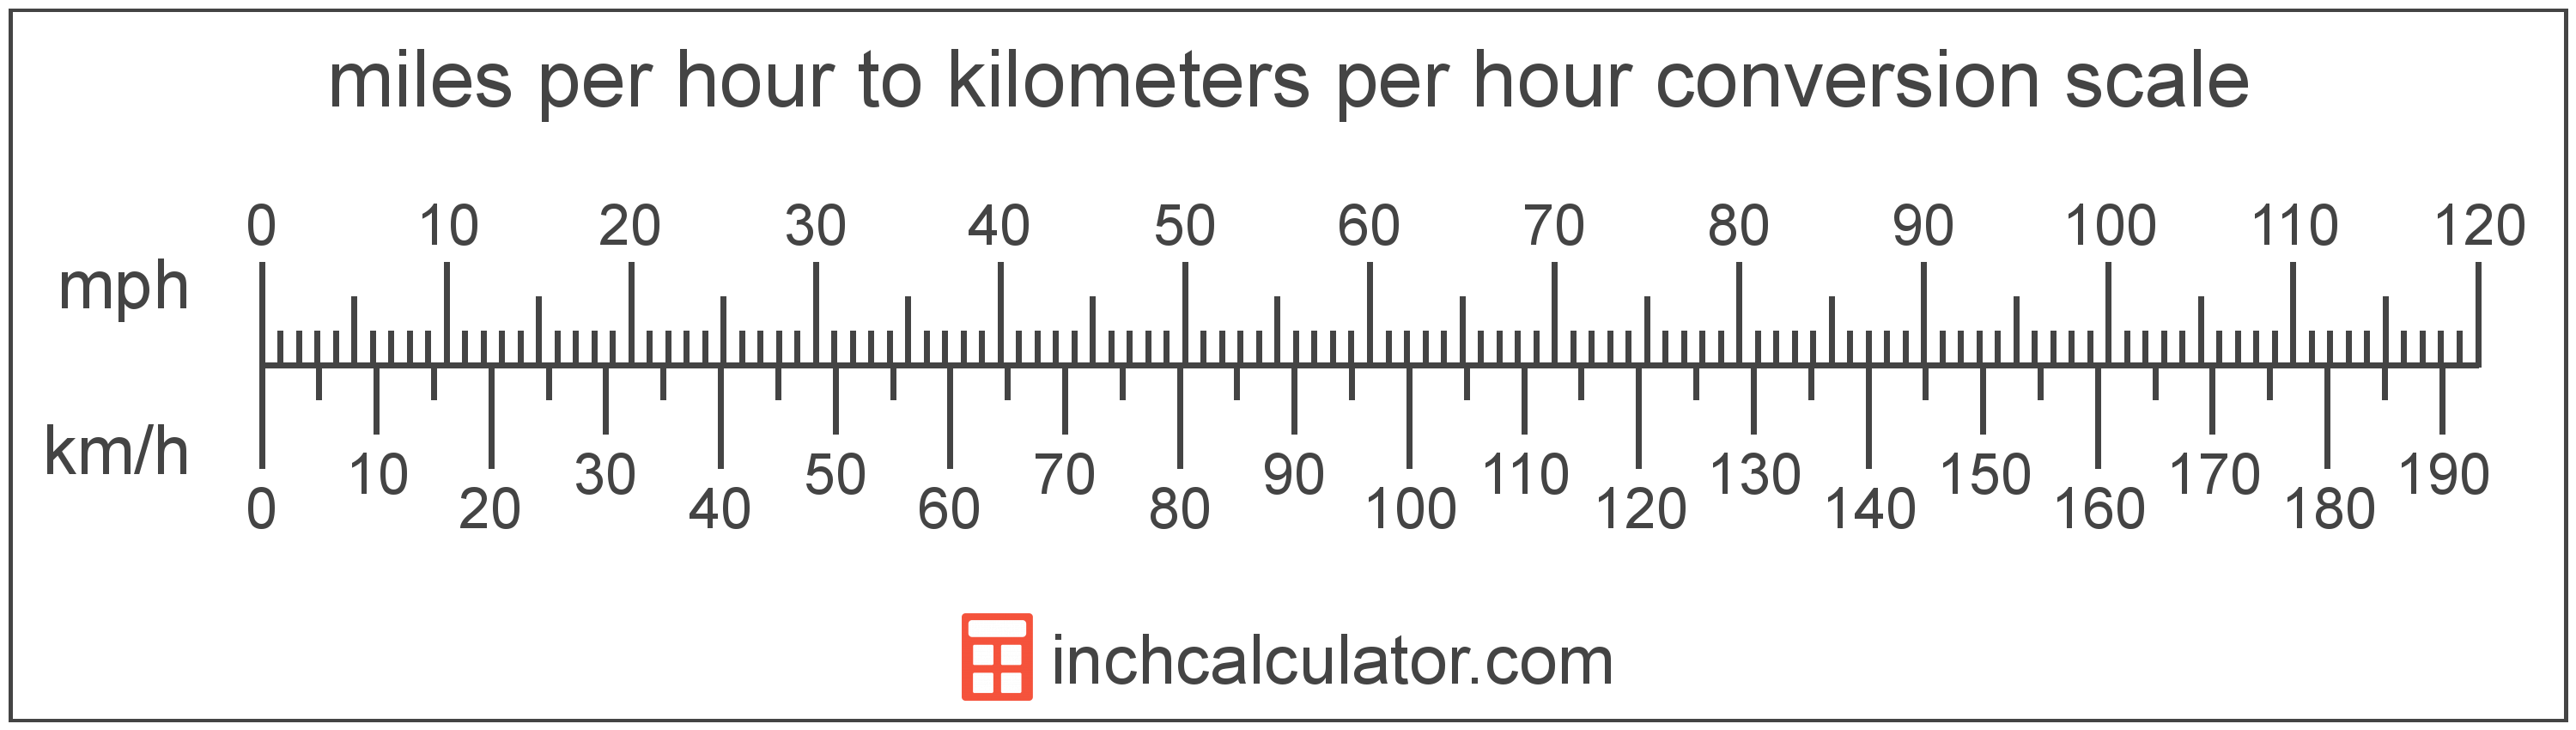 conversion-chart-miles-to-kilometers-per-hour-chart-walls